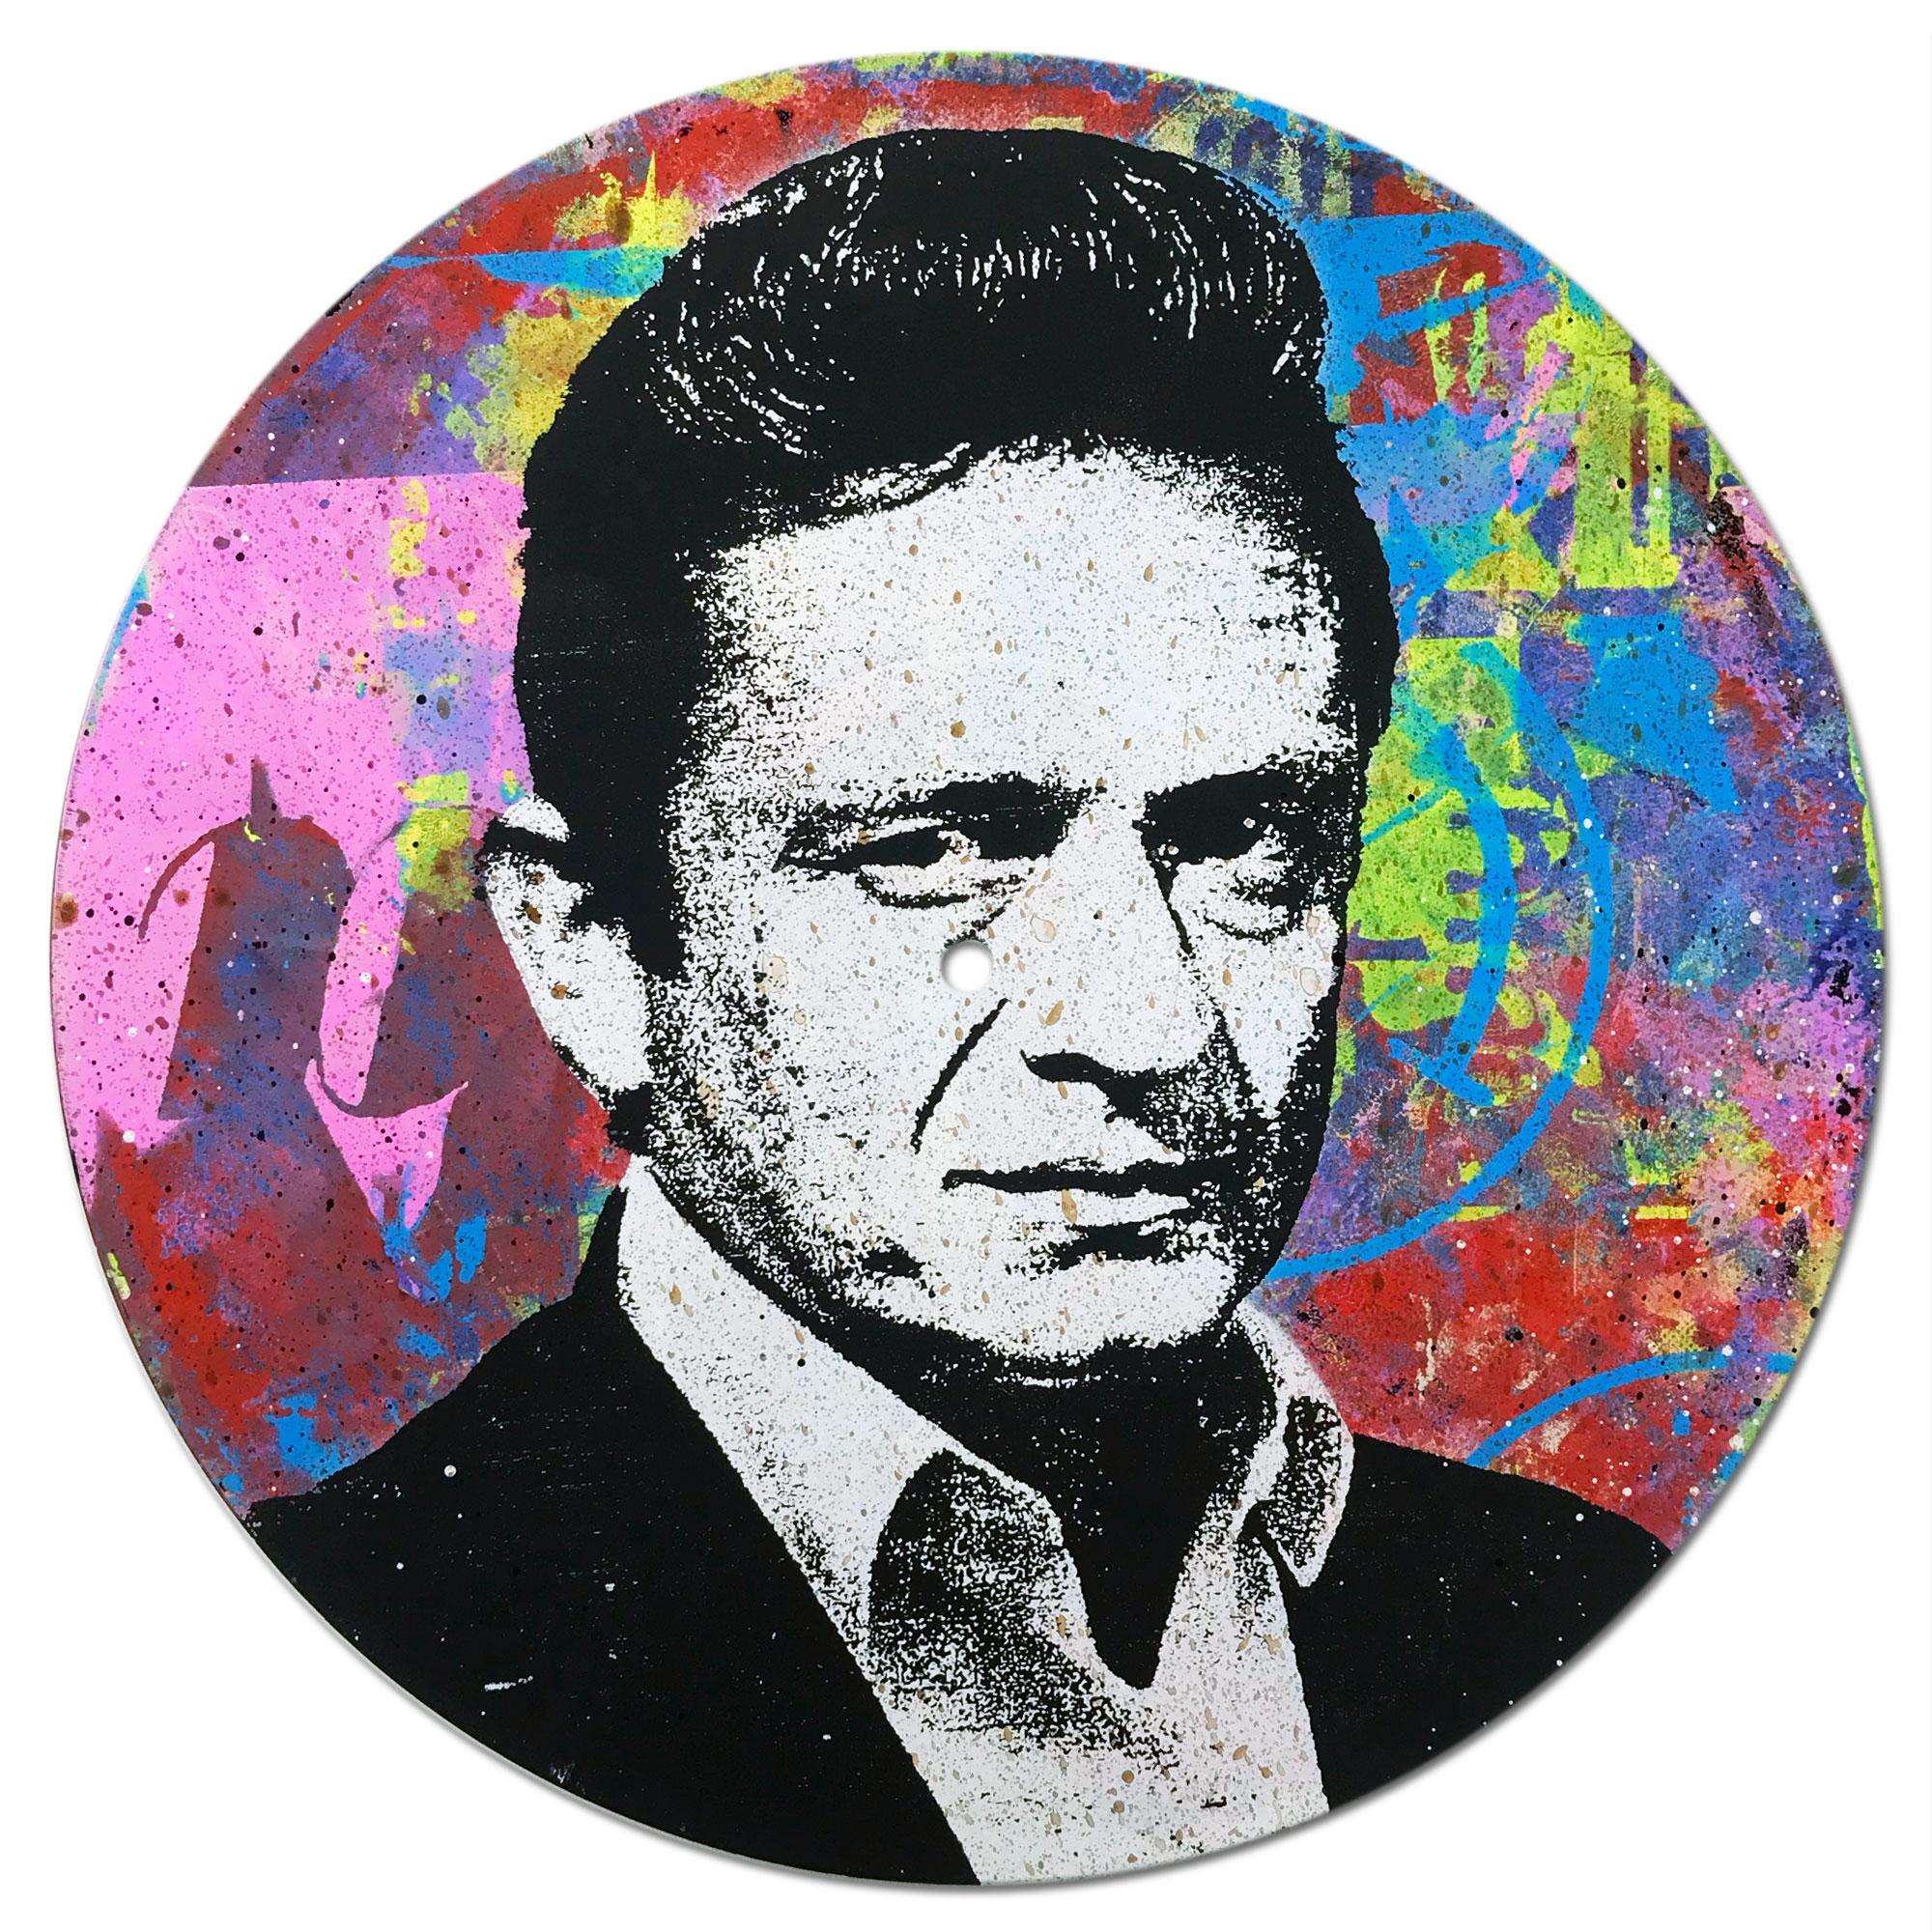 Johnny Cash Vinyl 1-10, Greg Gossel Pop Art LP Record (Singles & Sets Available) For Sale 1